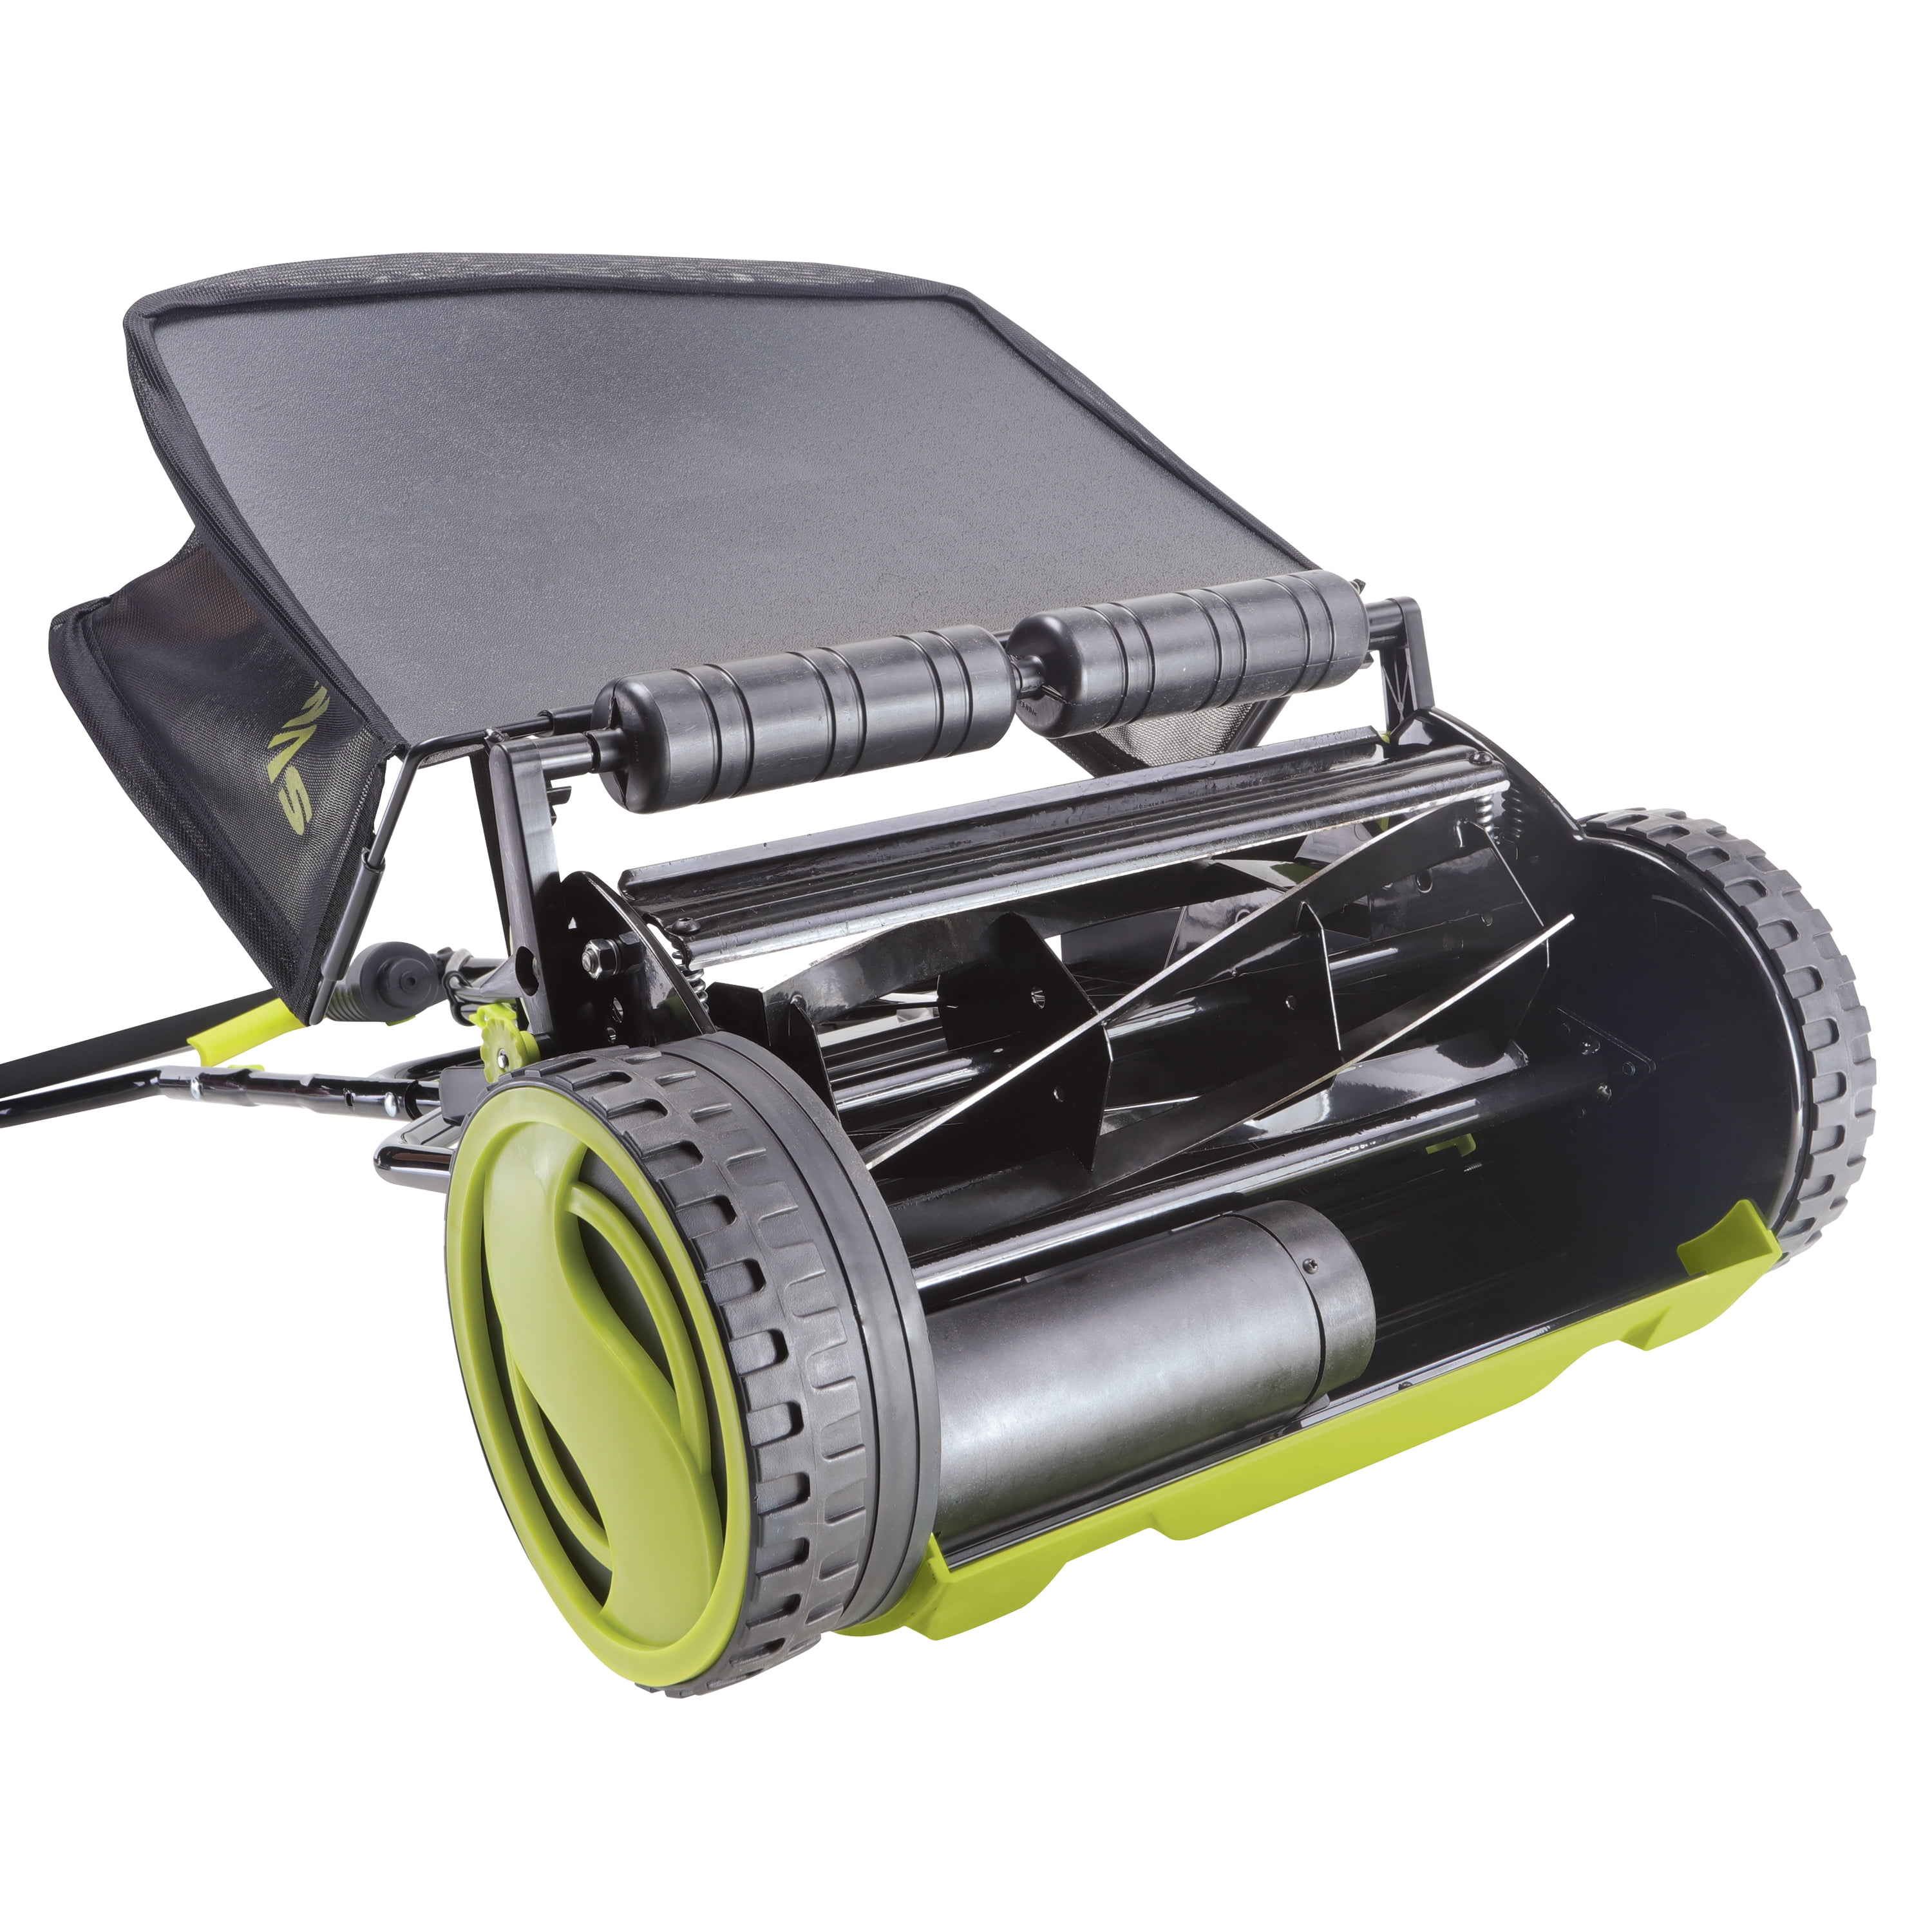 Sunjoe Front Roller MOD cordless electric reel mower 